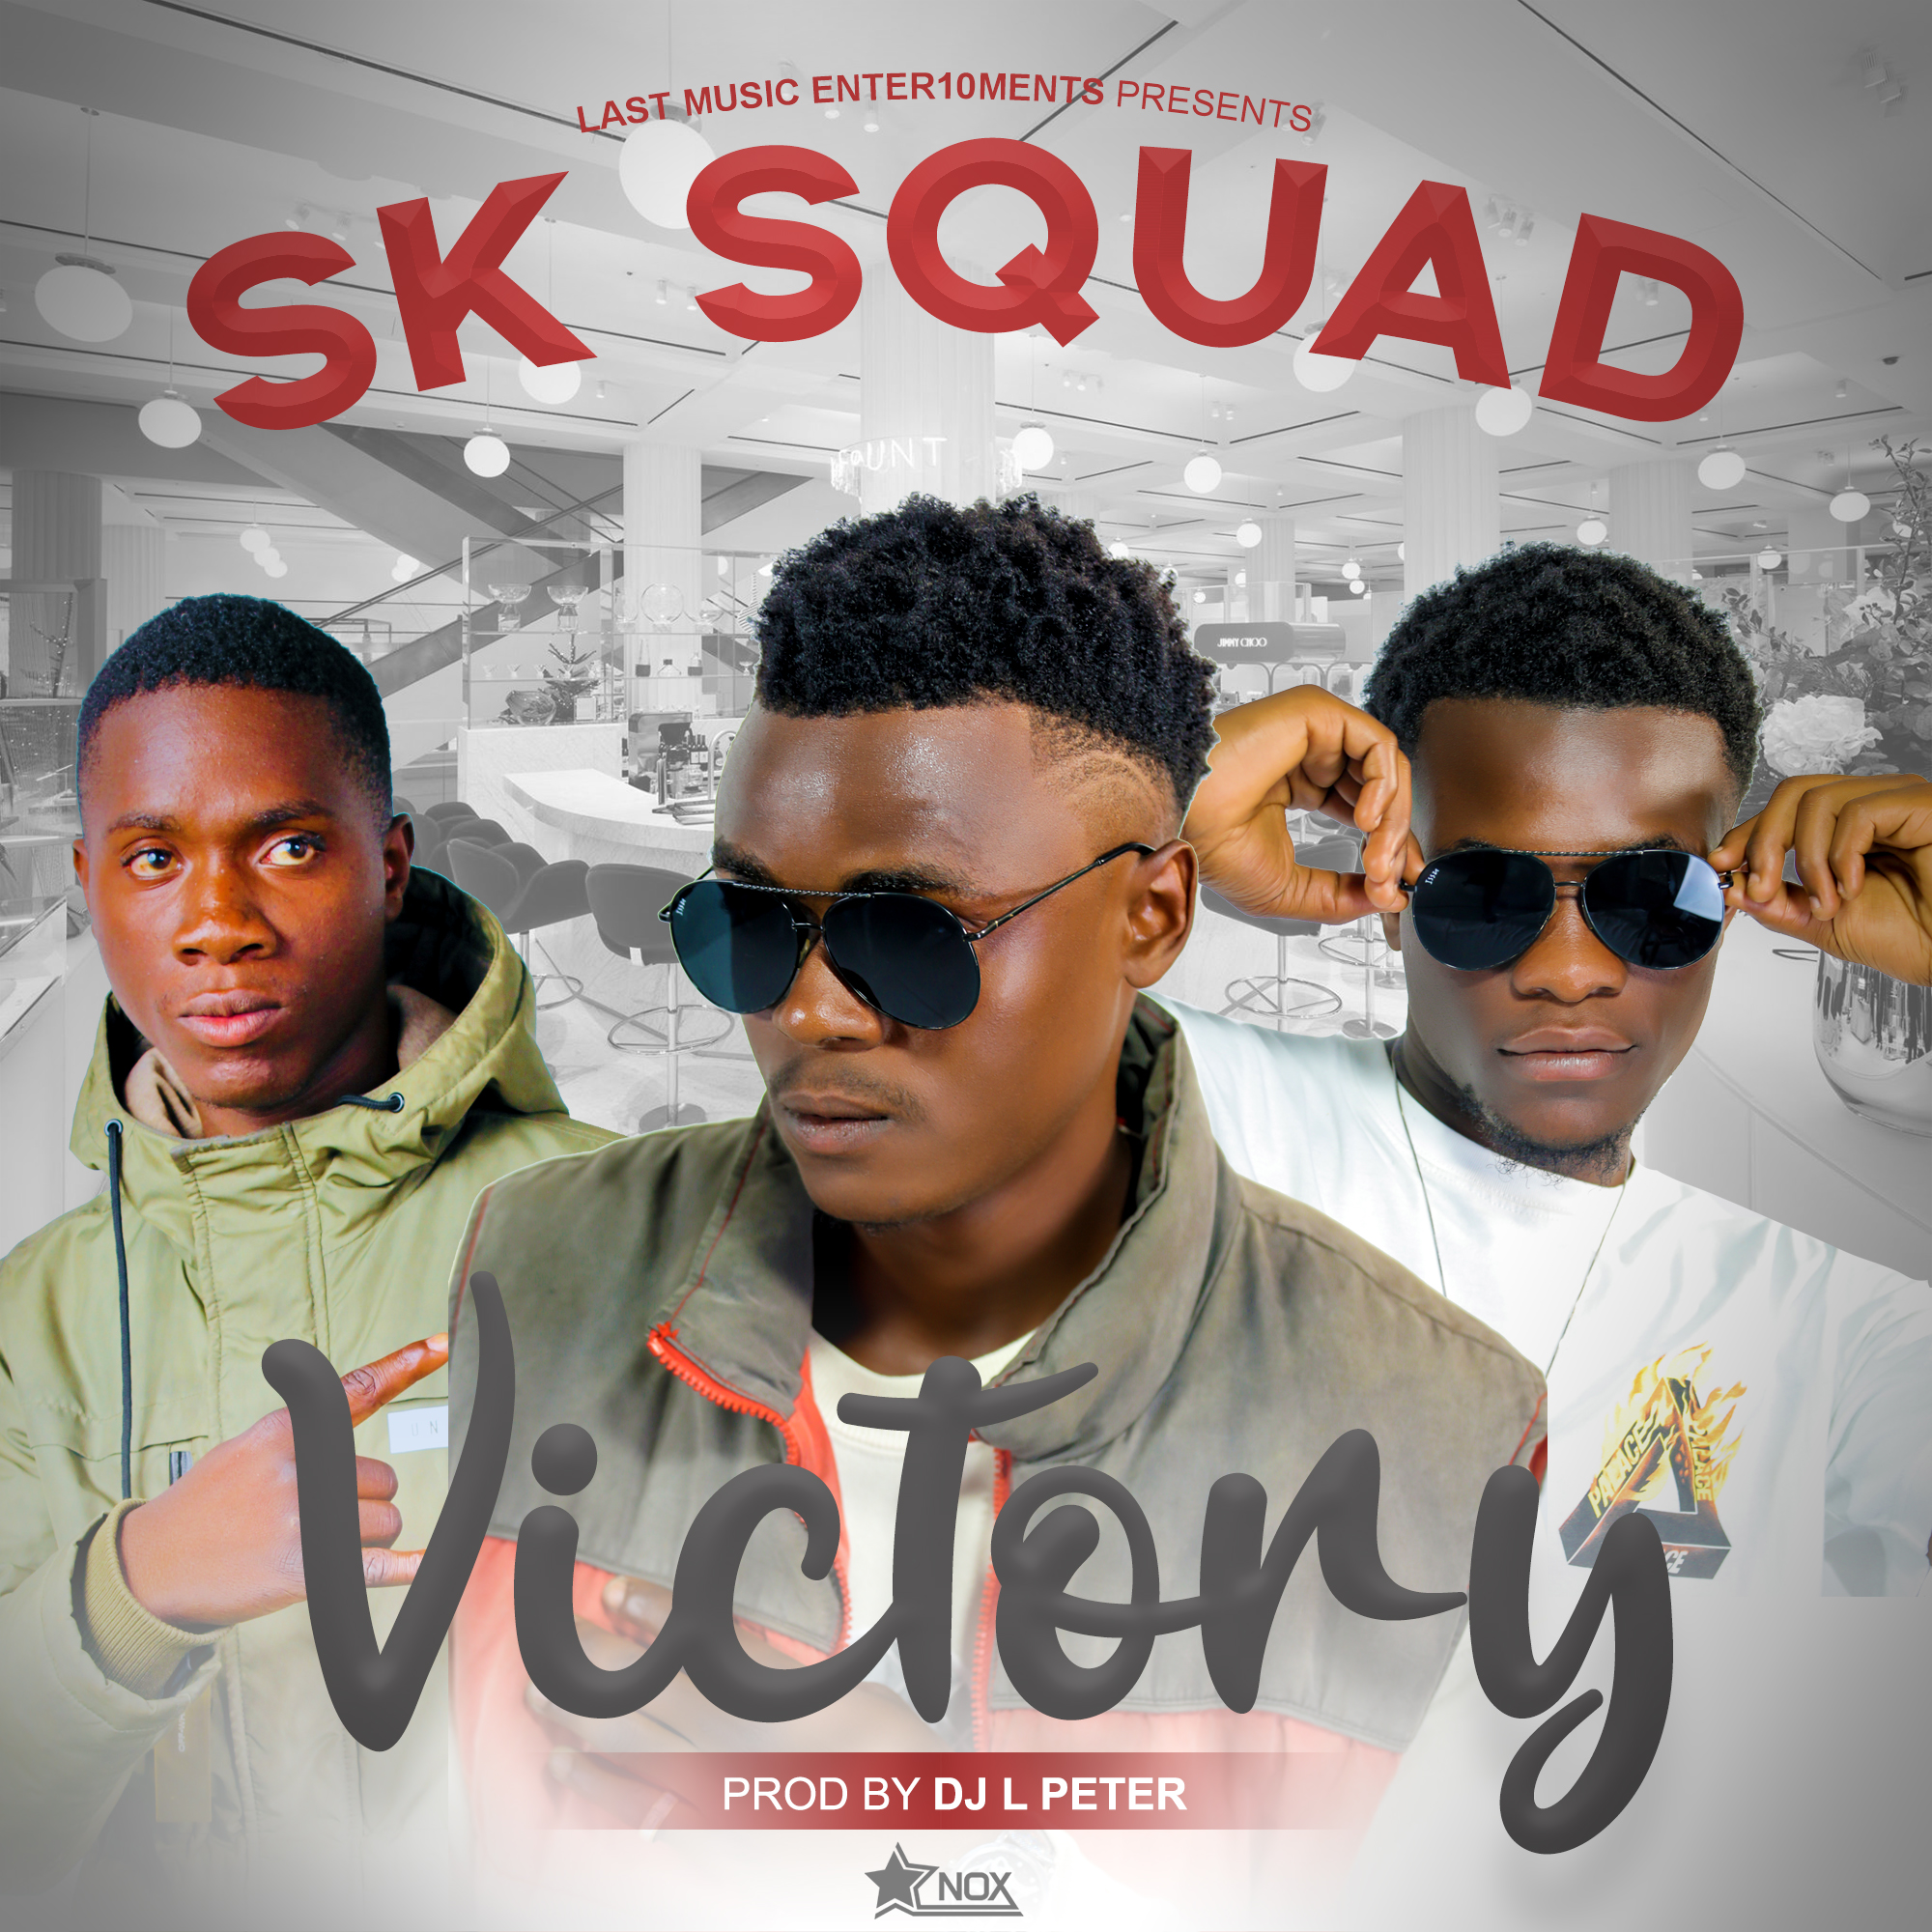 Sk Squad - Victory (Prod Dj L Peter)